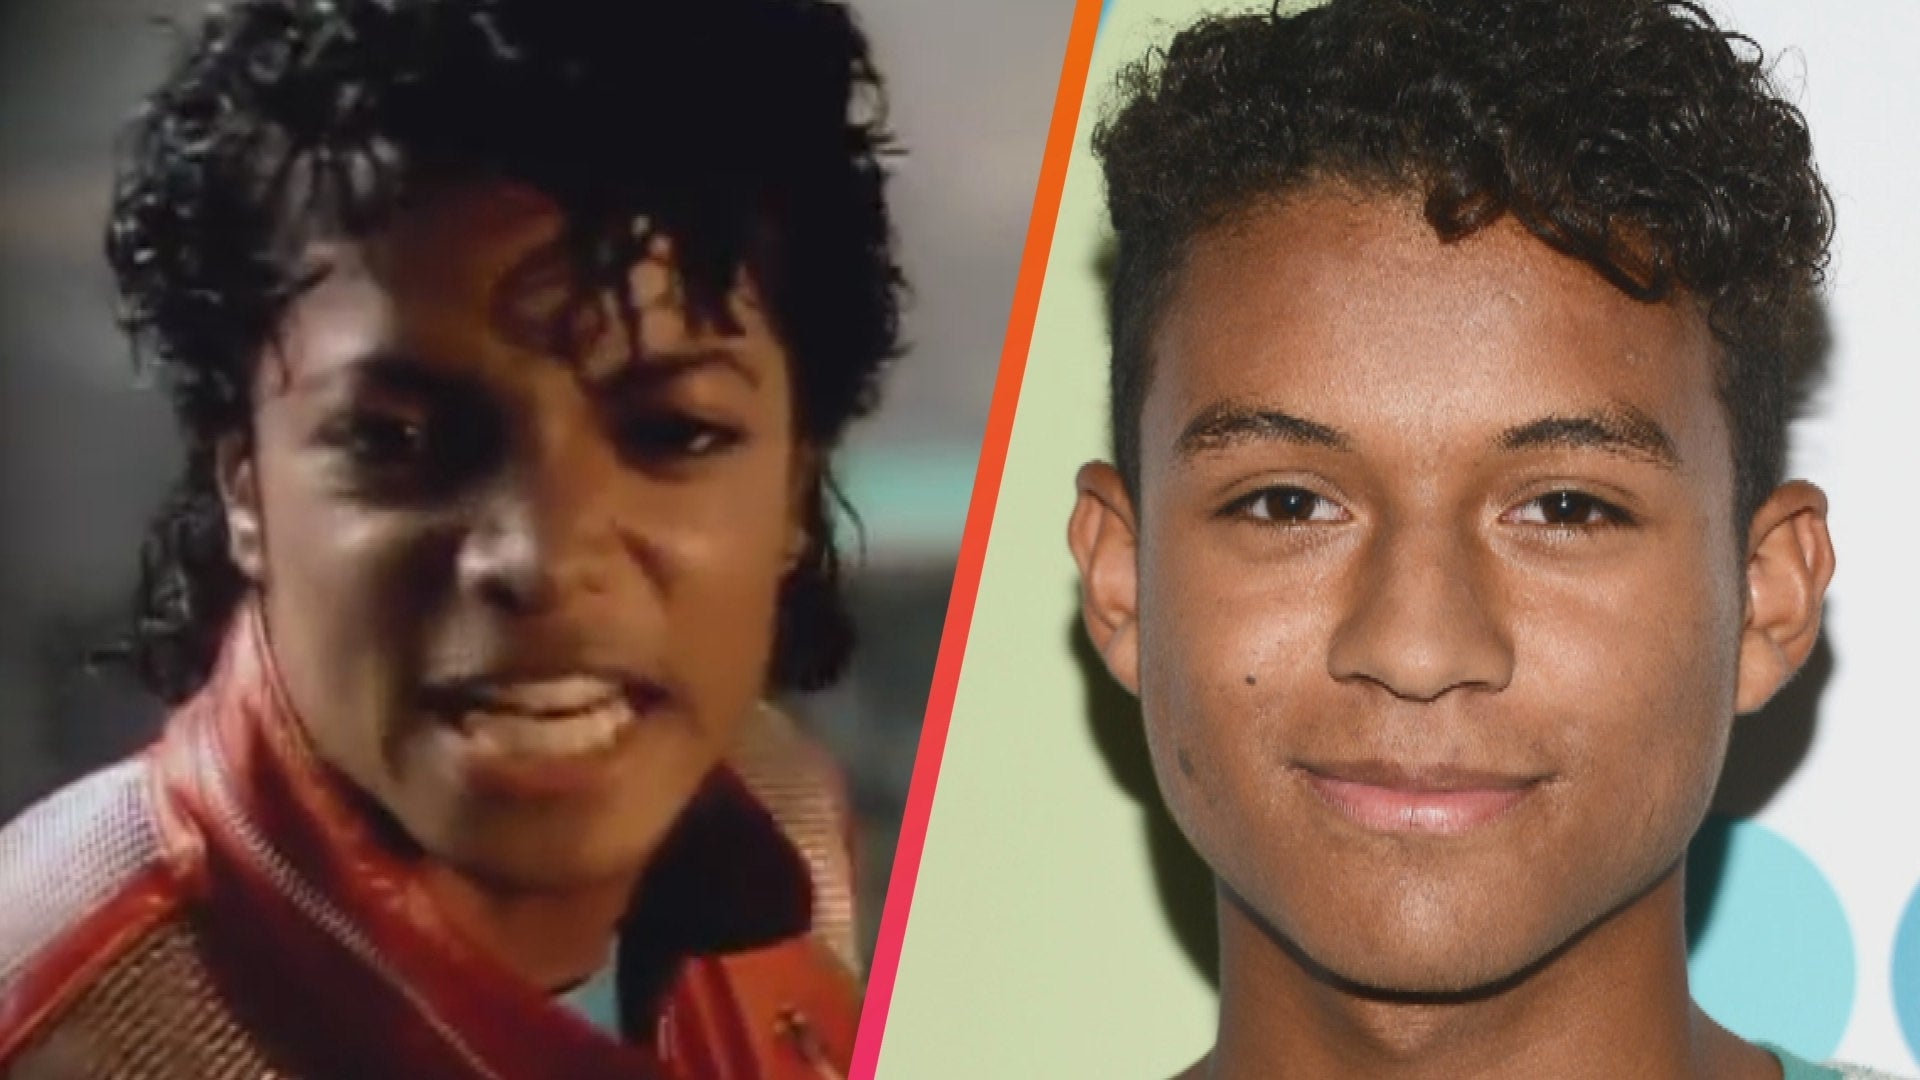 Michael Jackson's nephew Jaafar Jackson to play him in movie biopic